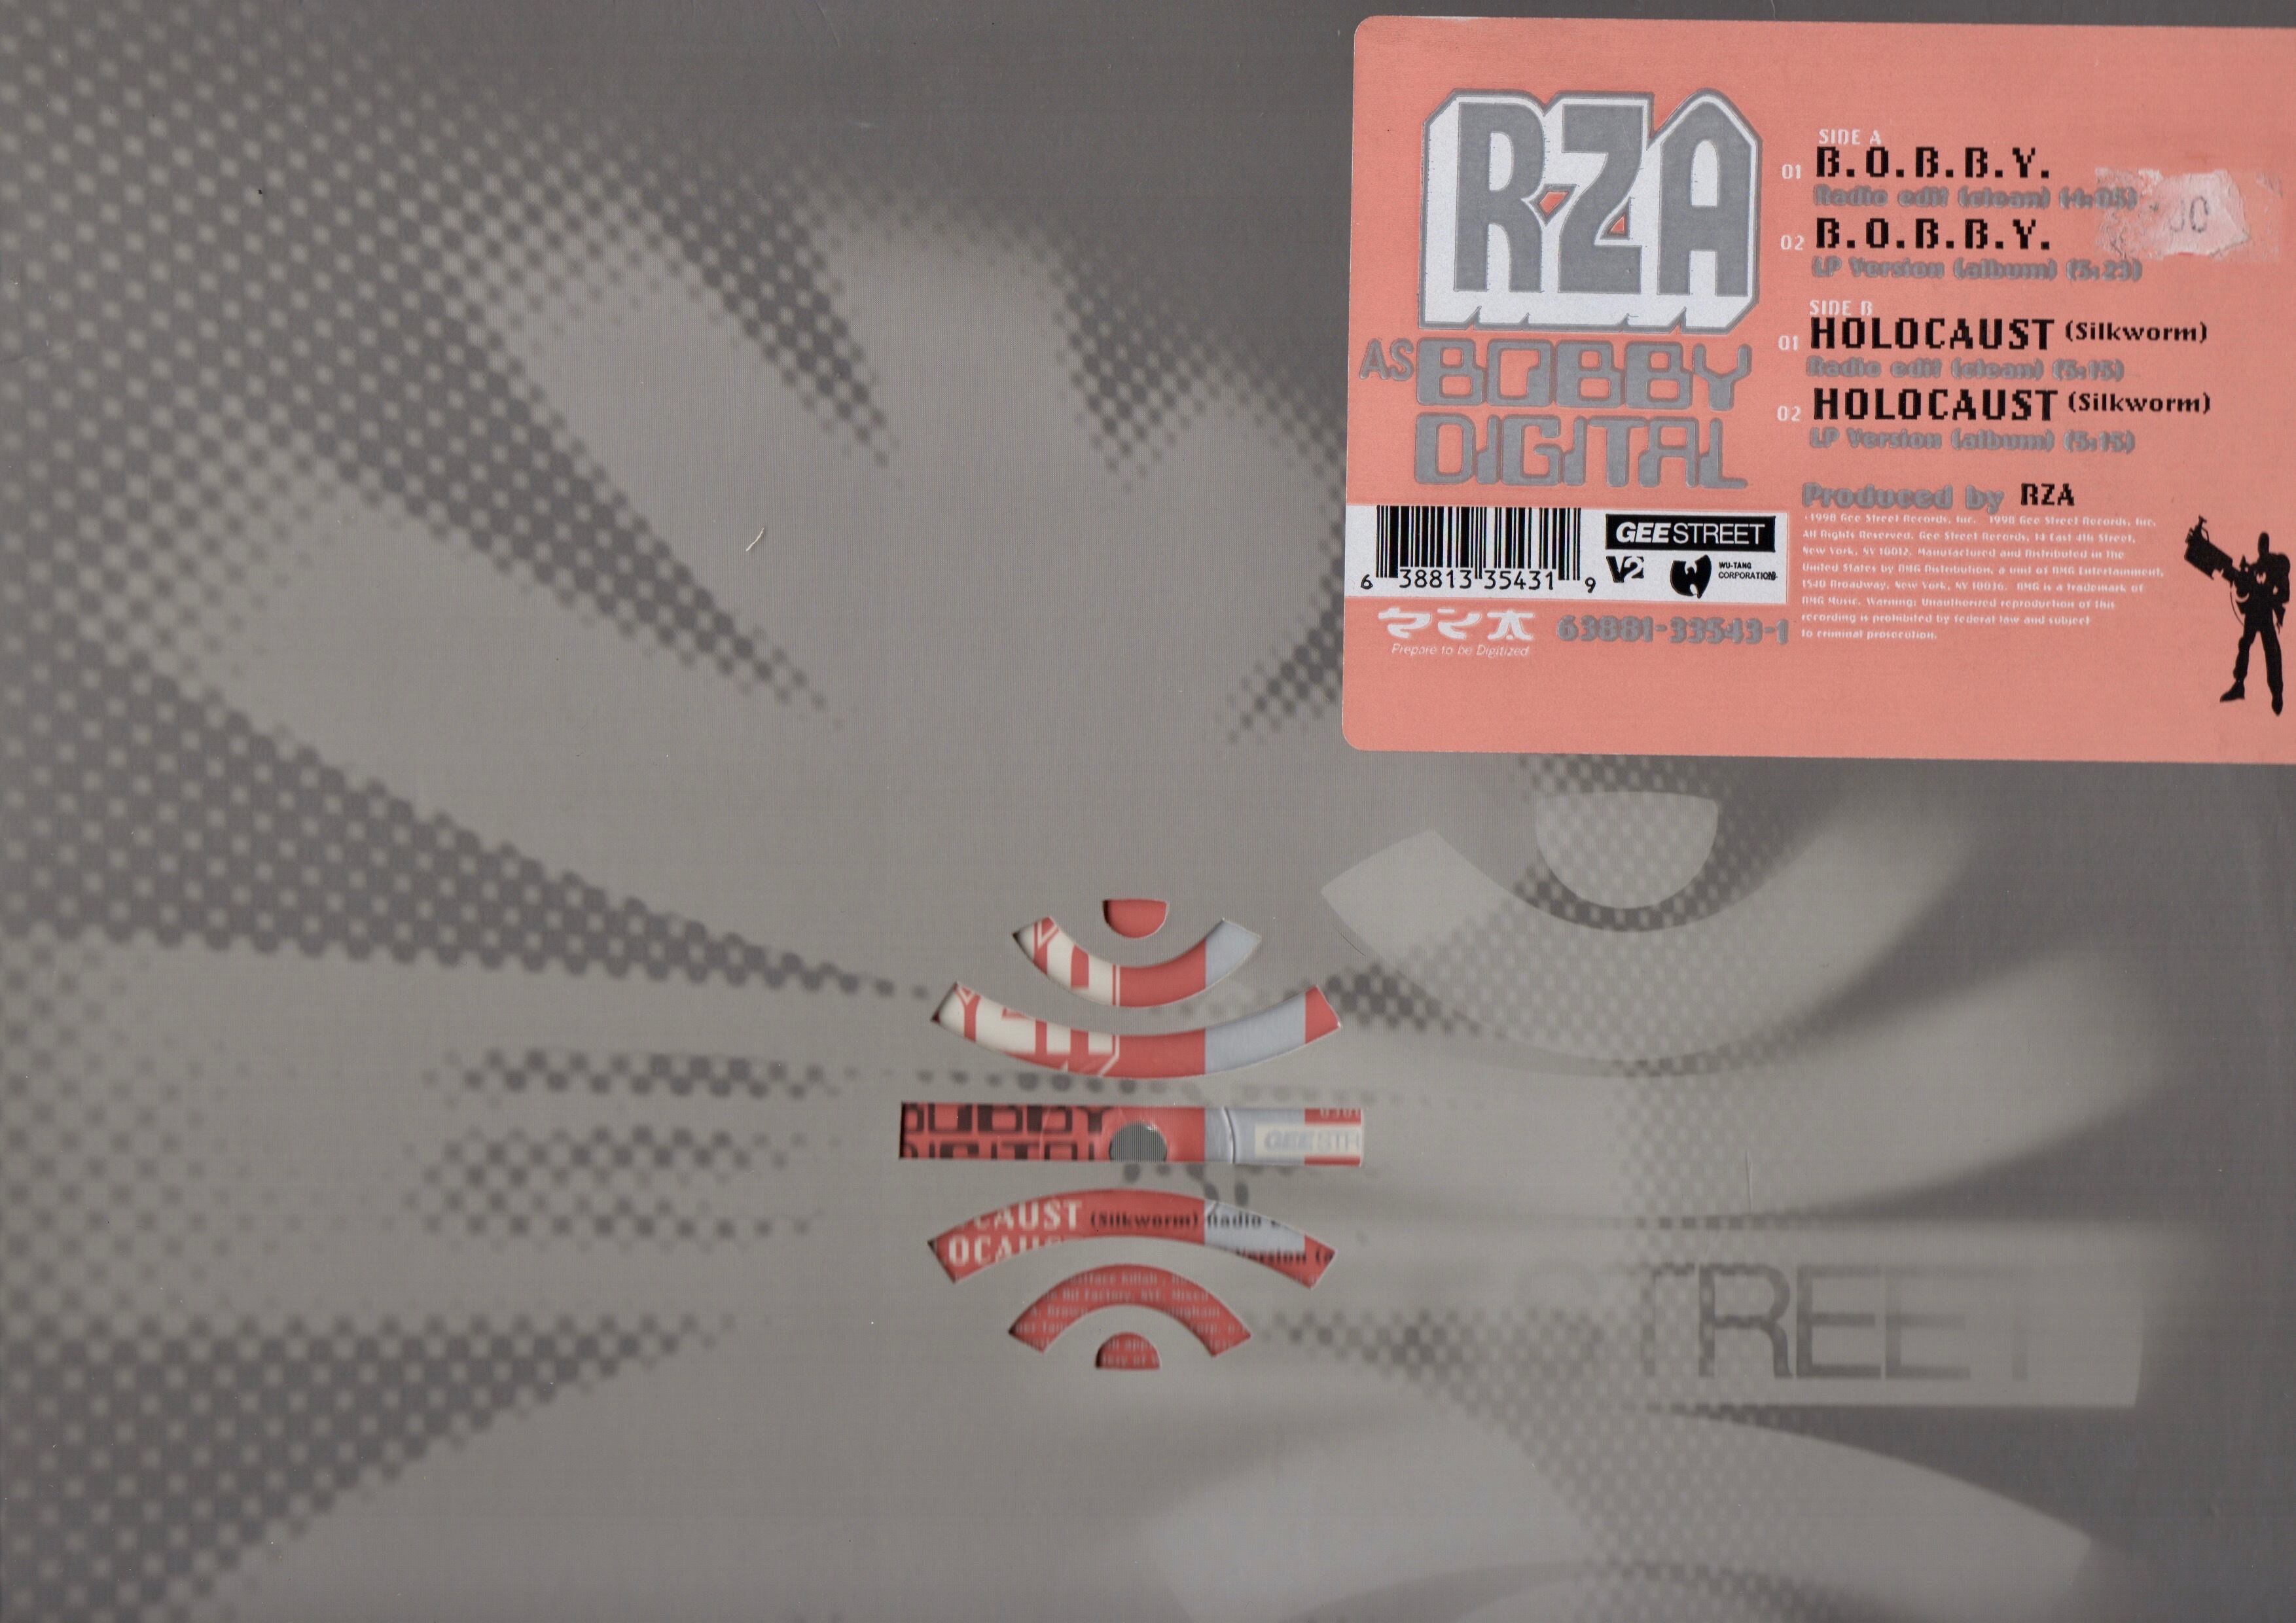 12inch】RZA　COMPACT　Digital　Bobby　as　Holocaust　DISCO　(Silk　Worm)　ASIA